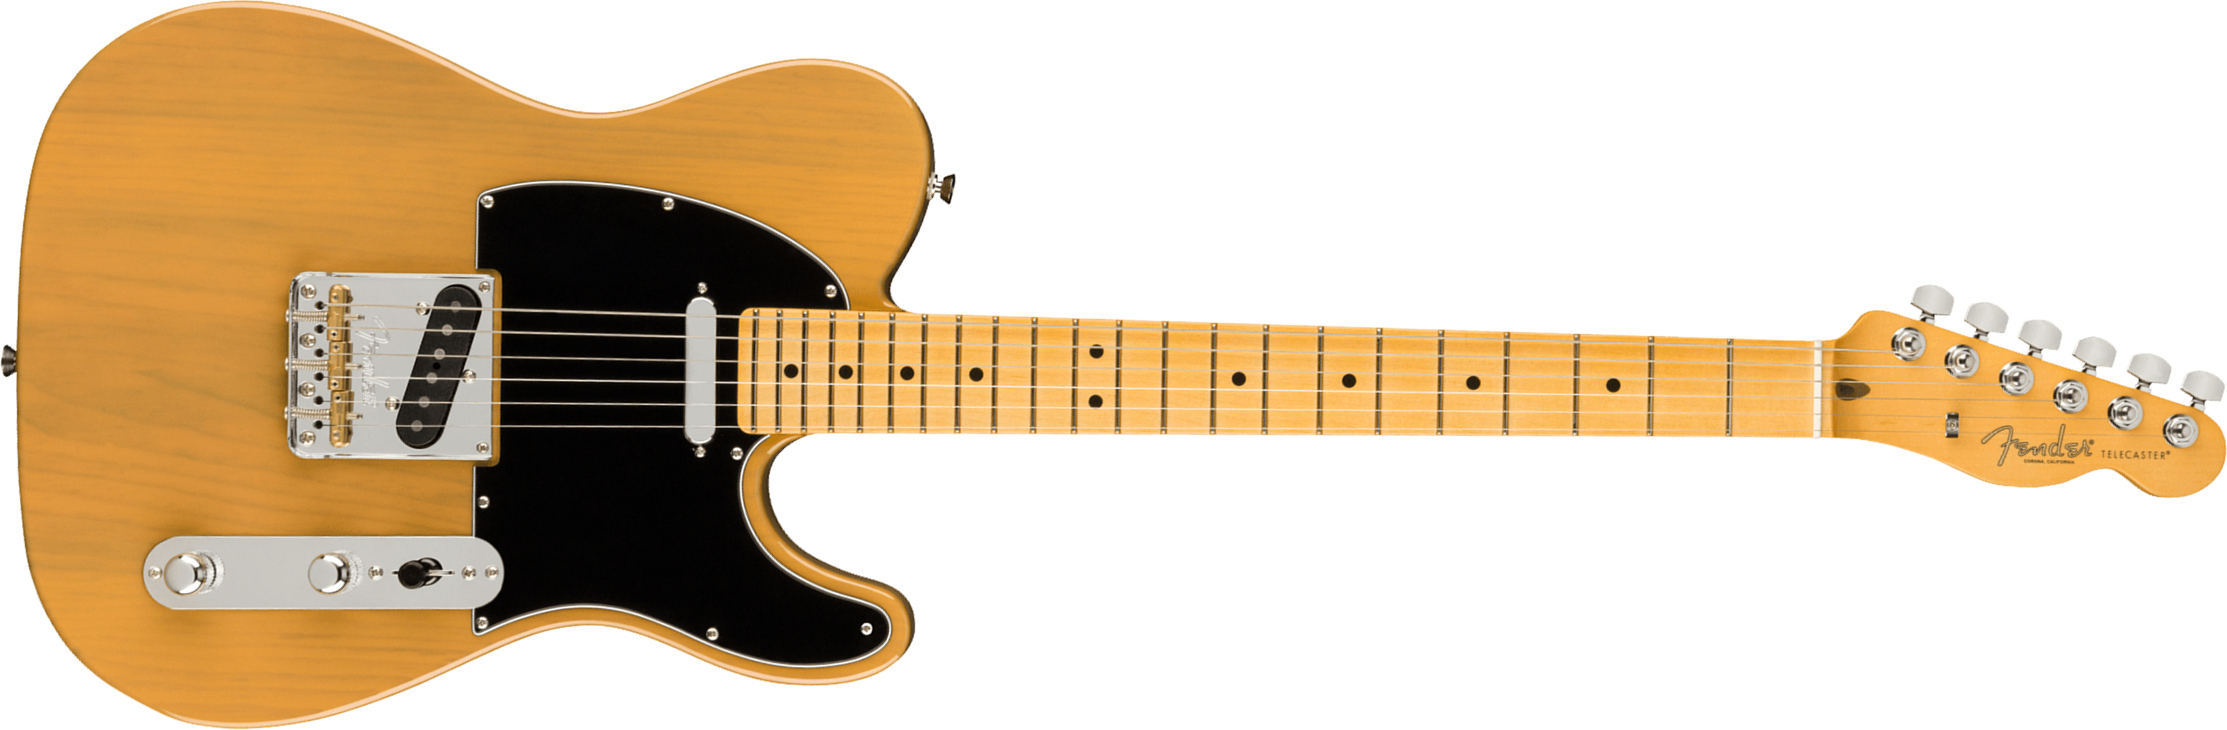 Fender Tele American Professional Ii Usa Mn - Butterscotch Blonde - Guitare Électrique Forme Tel - Main picture